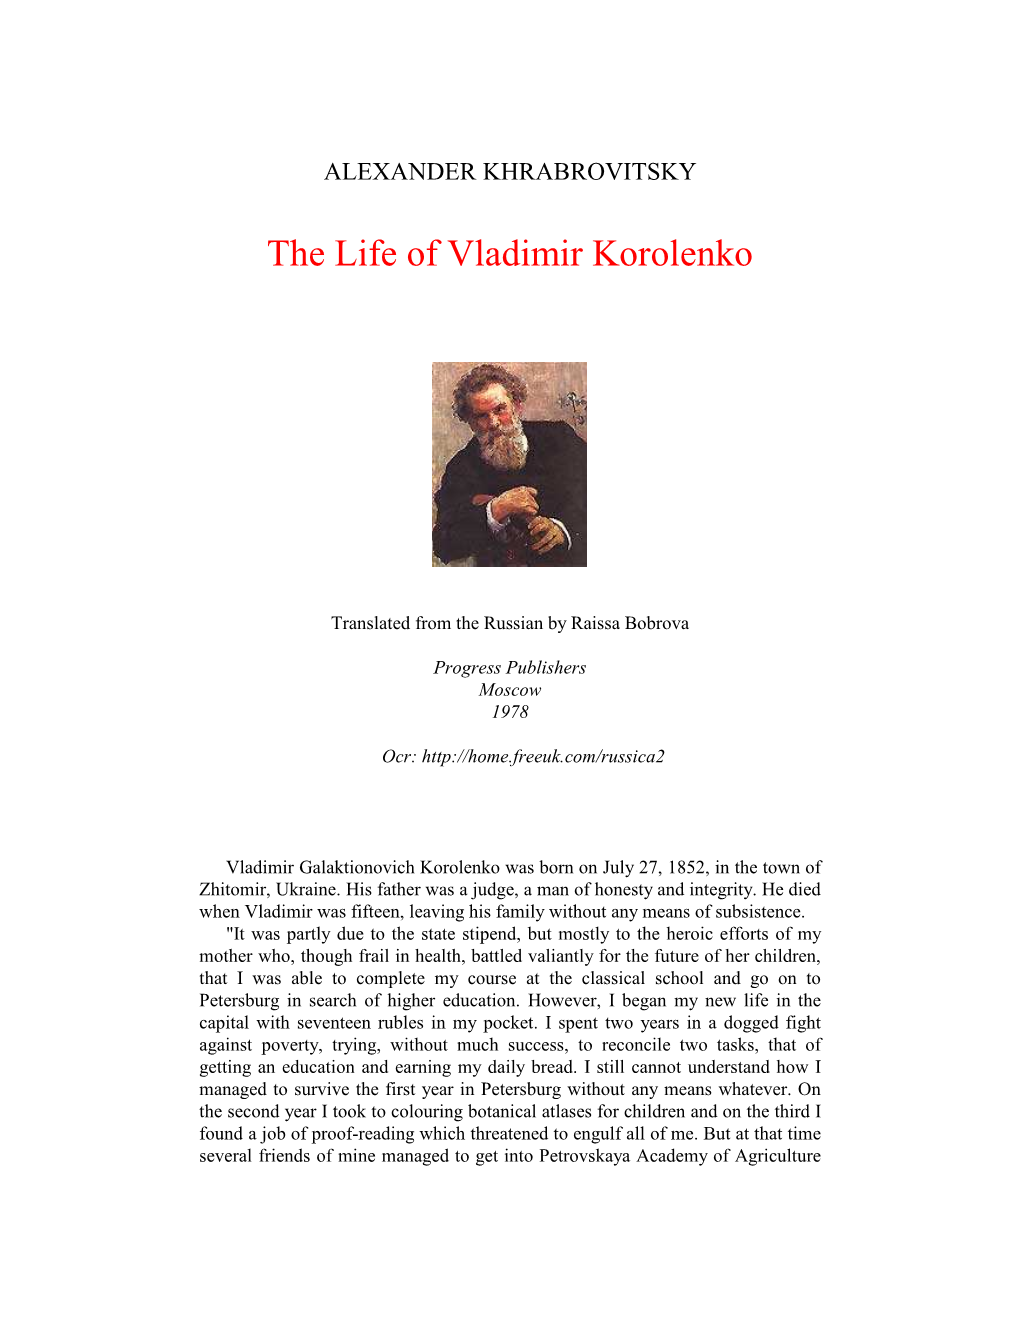 The Life of Vladimir Korolenko